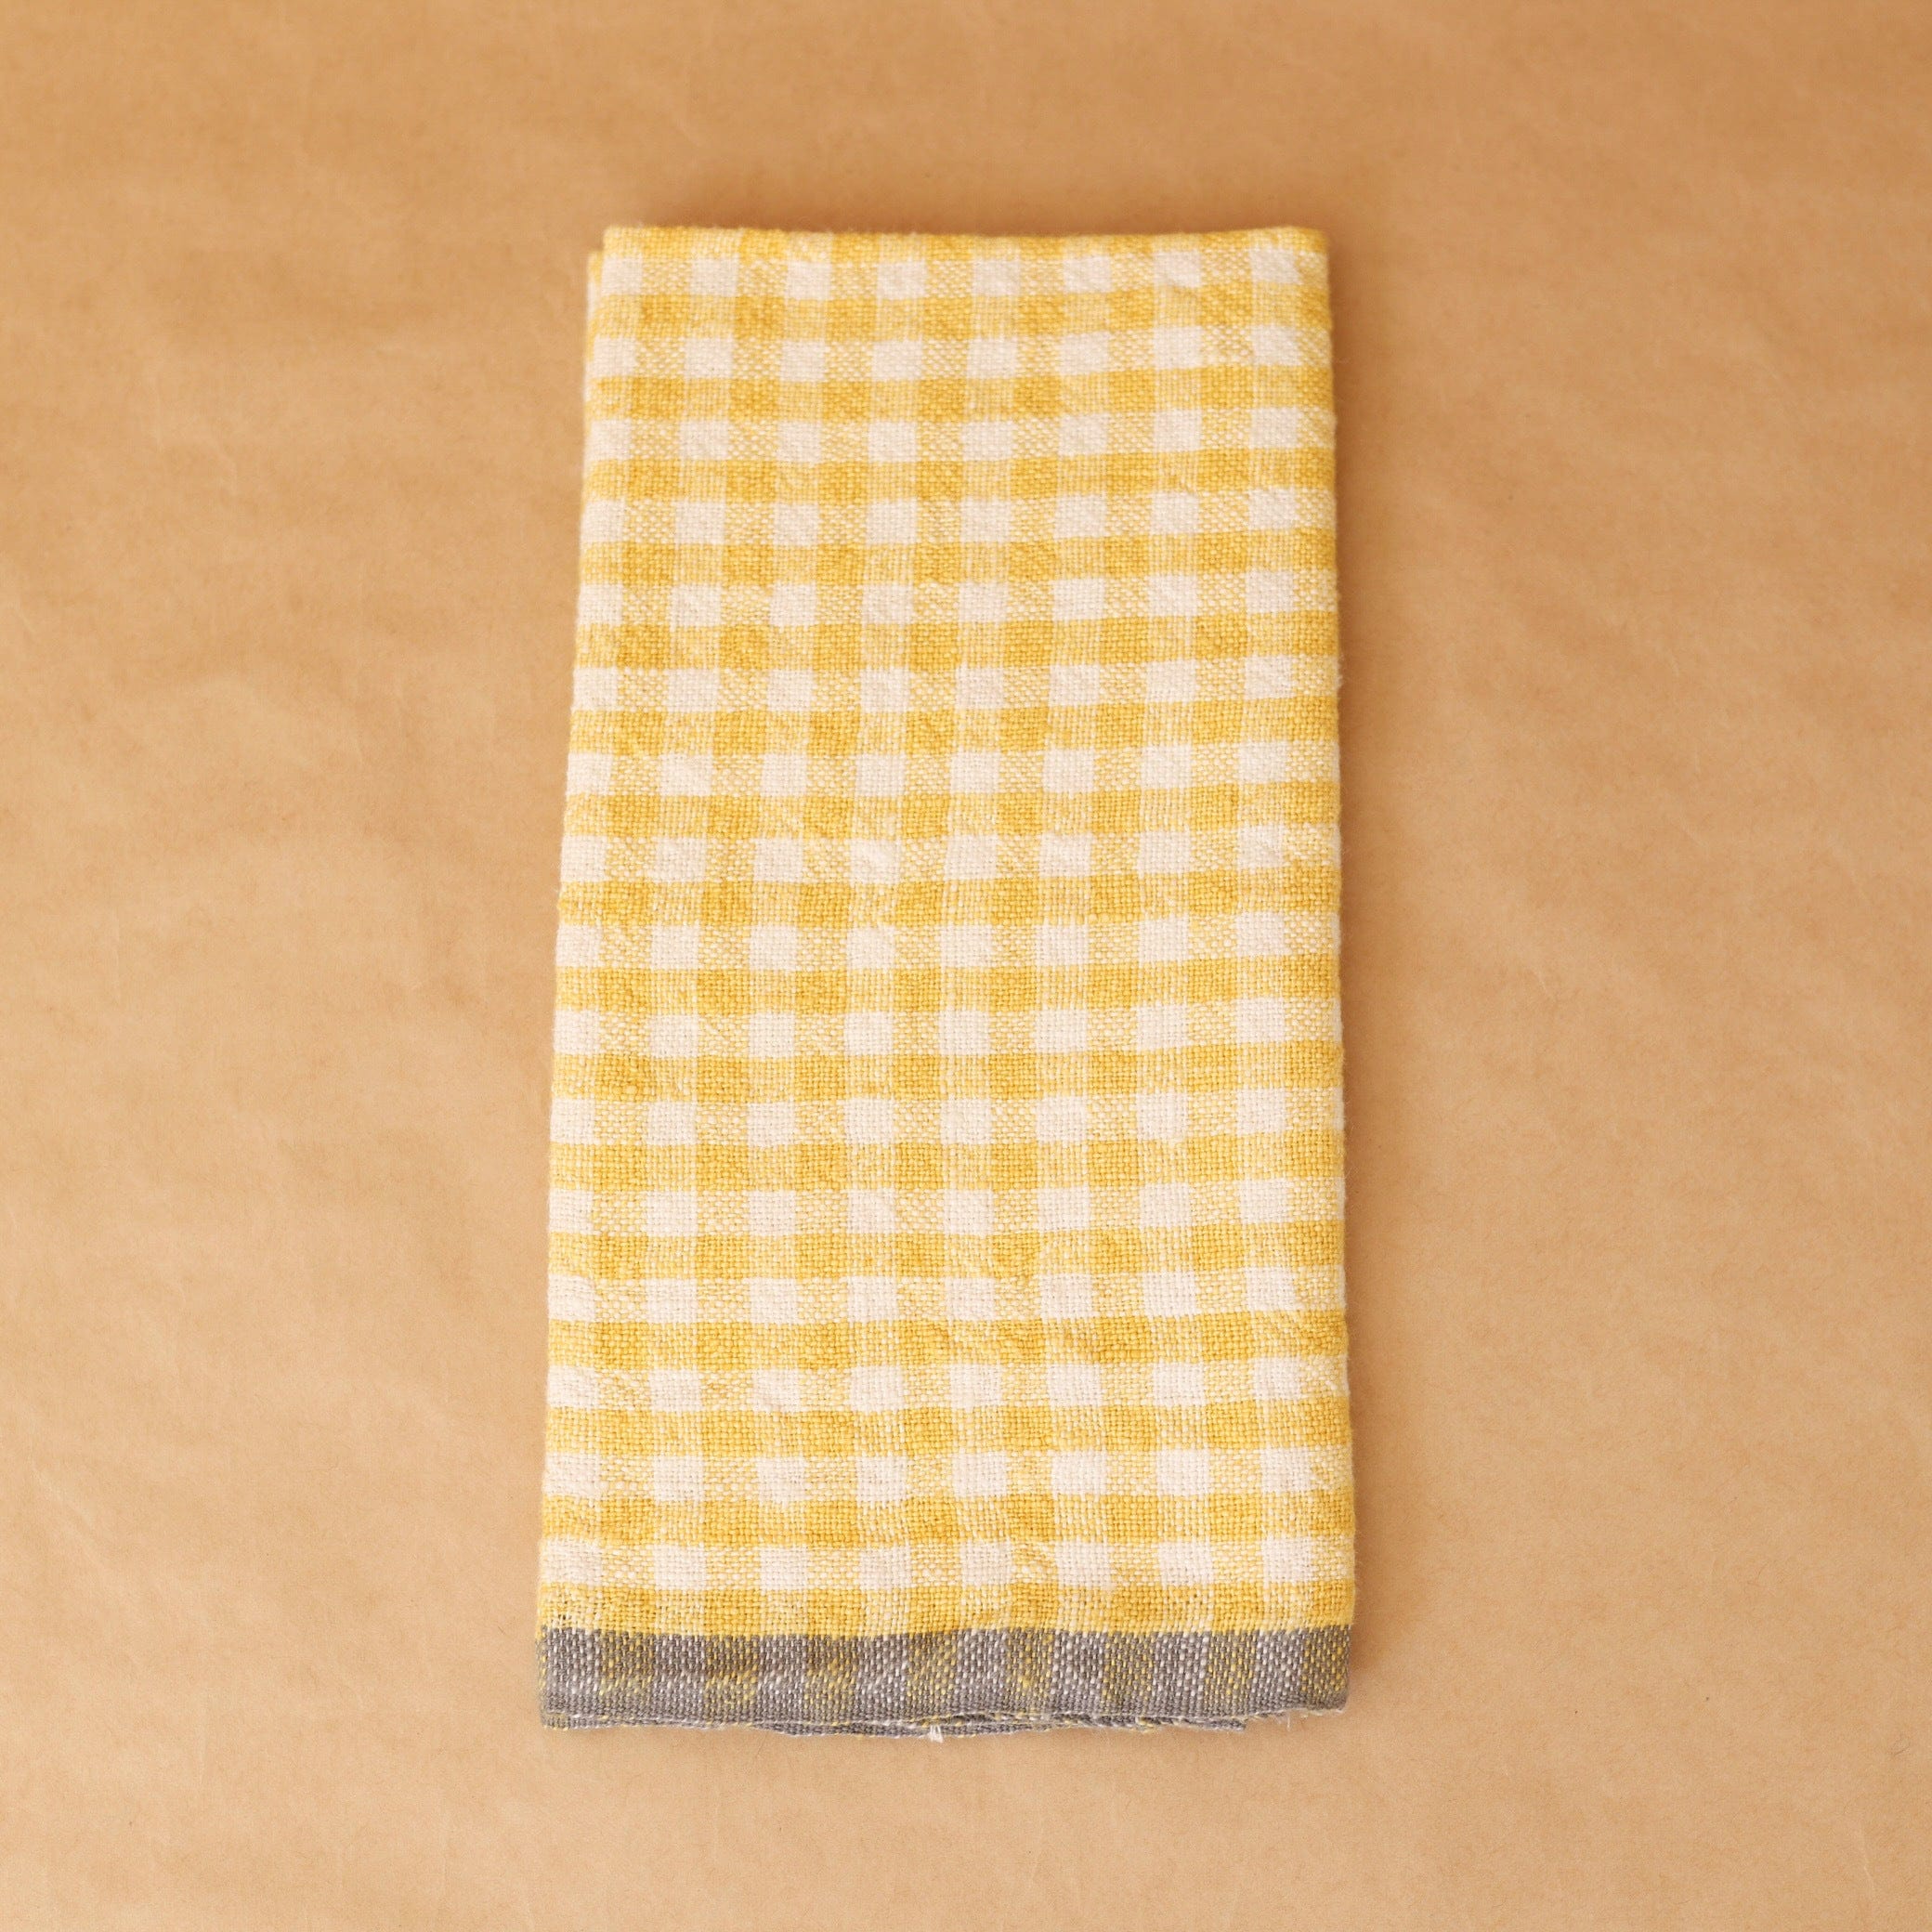 Caravan Linens Mustard With Grey Trim Checked Linen Towel